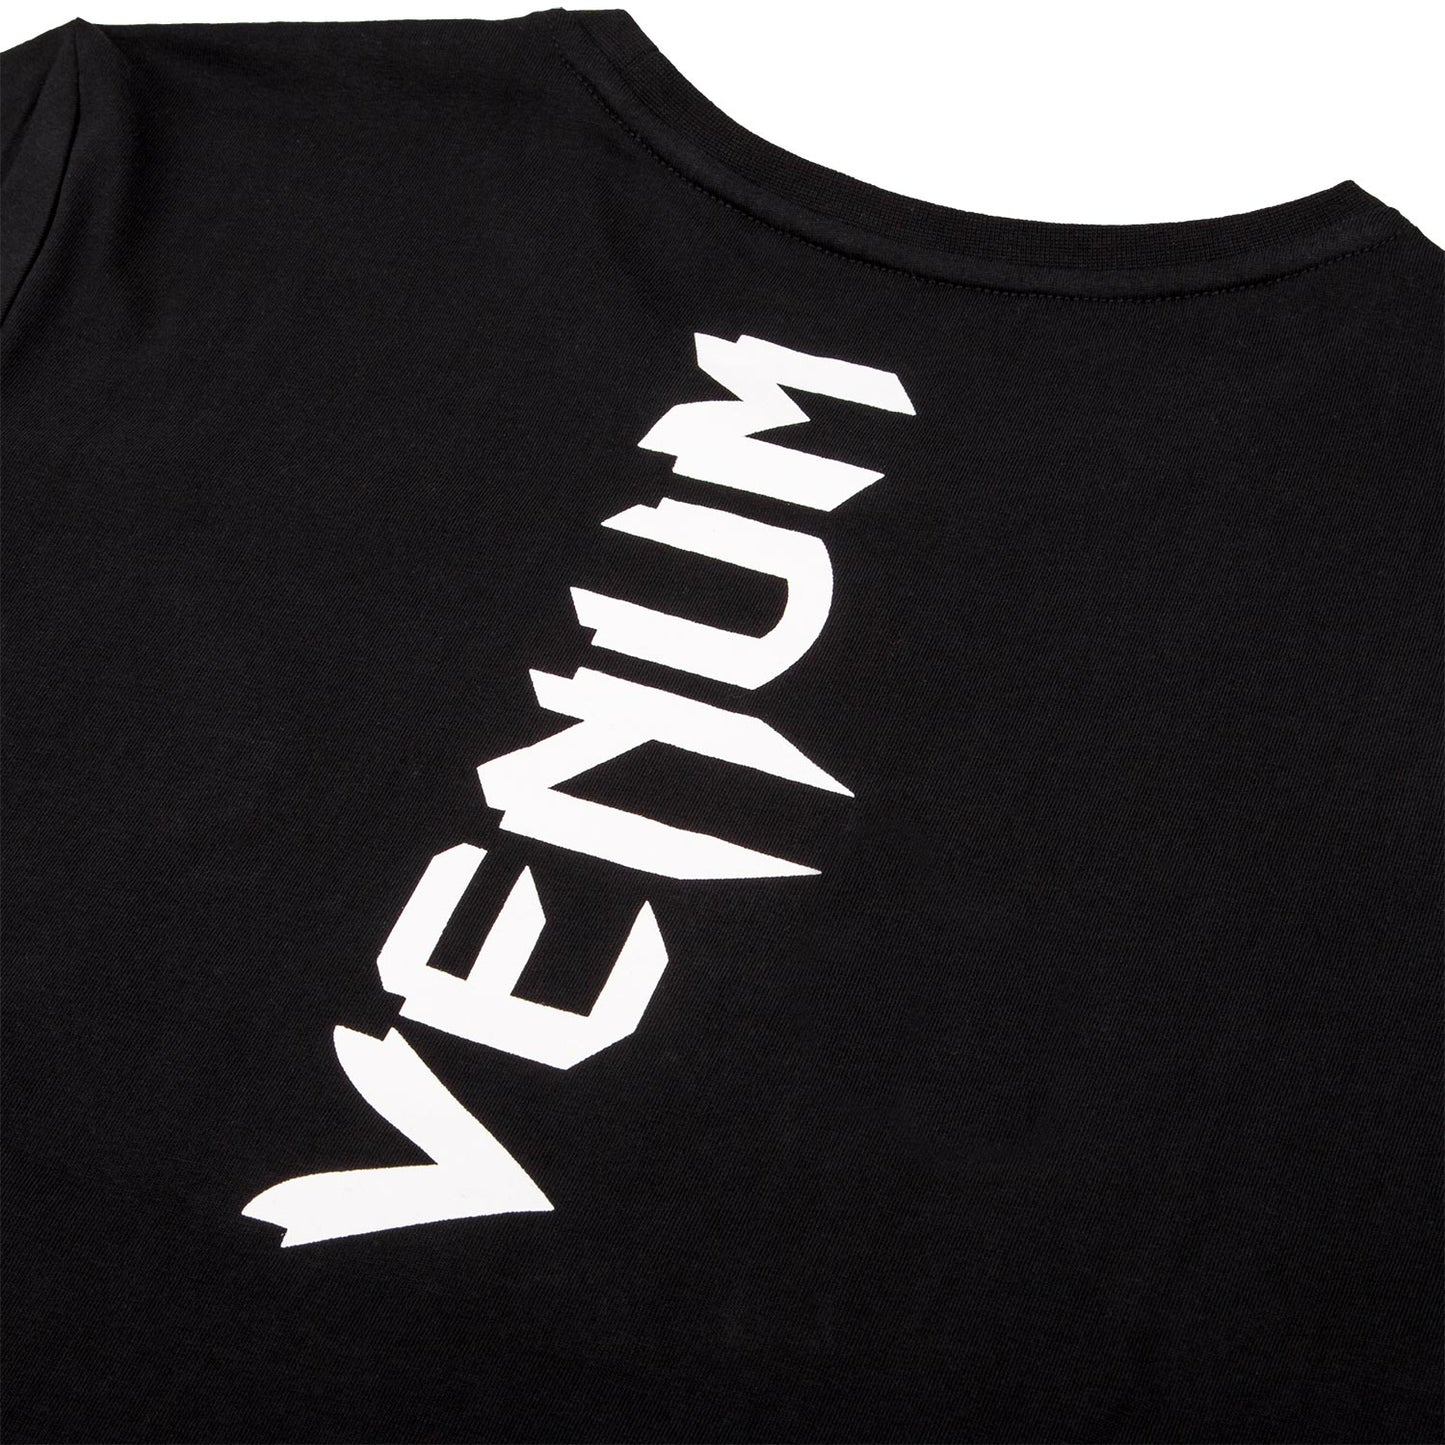 Venum Dragon's Flight T-shirt - Zwart/Rood - Zwart/Wit